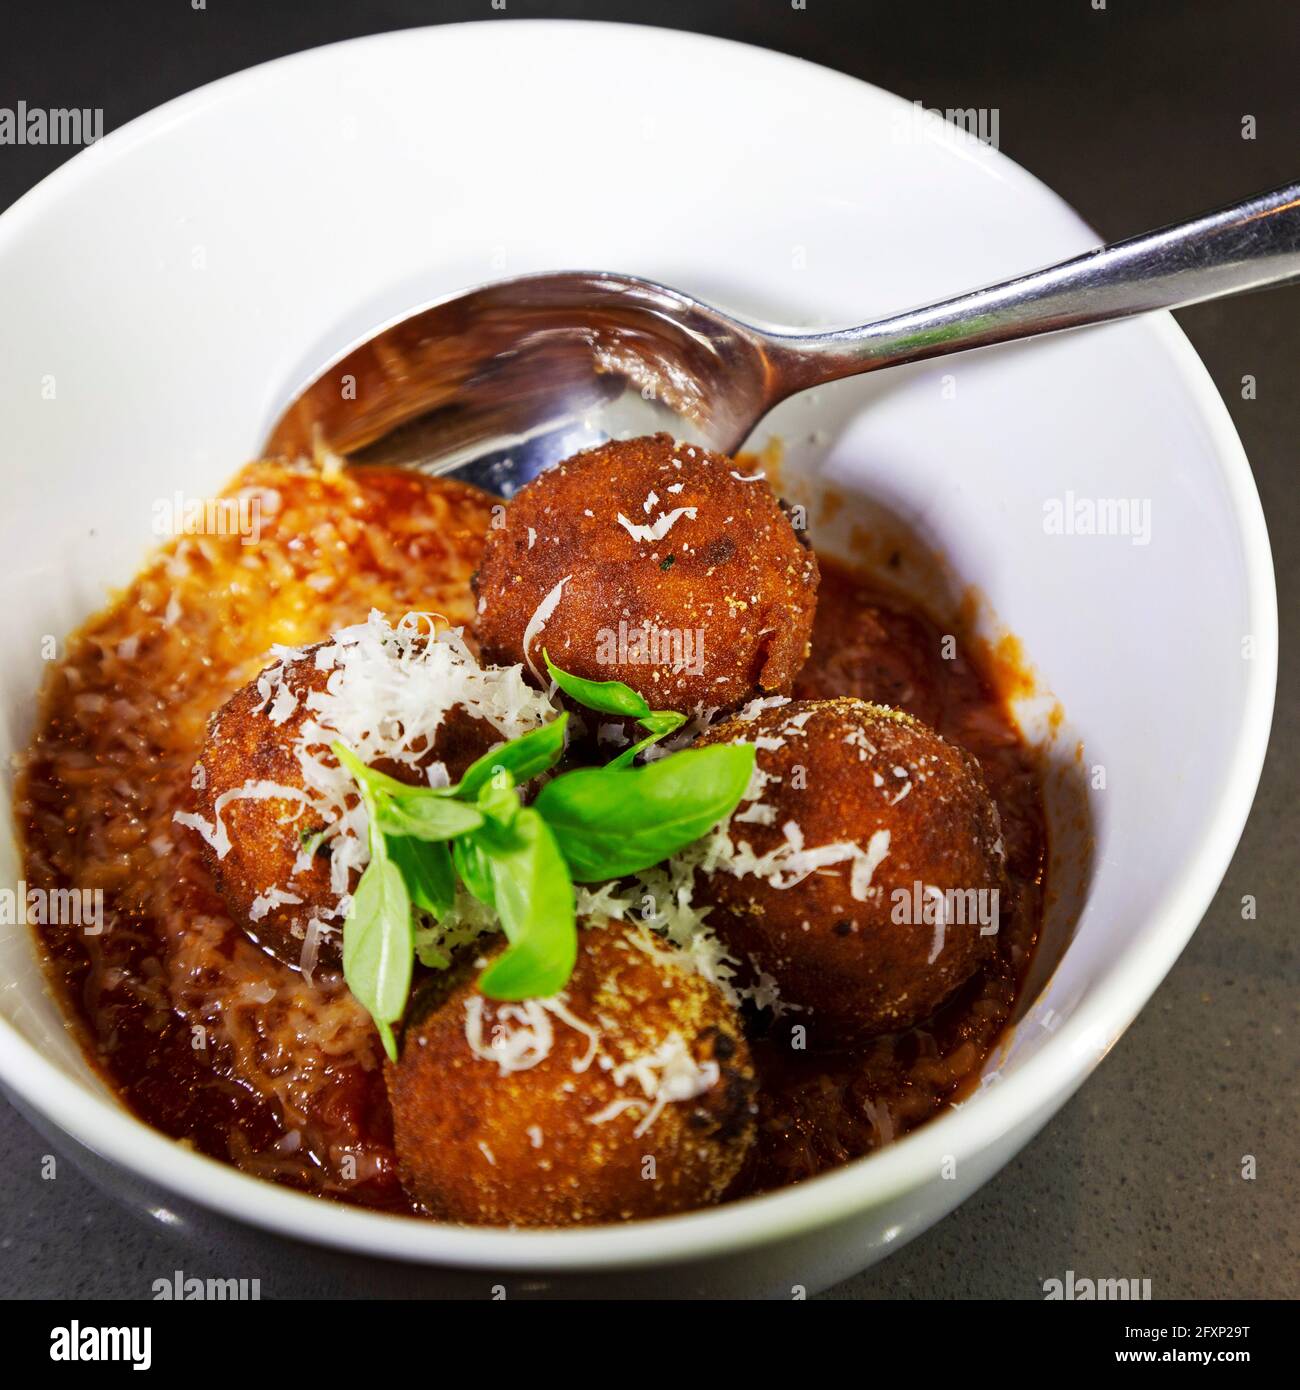 Arancini in tomato sauce. The dish is a popular example of Italian cuisine. Stock Photo